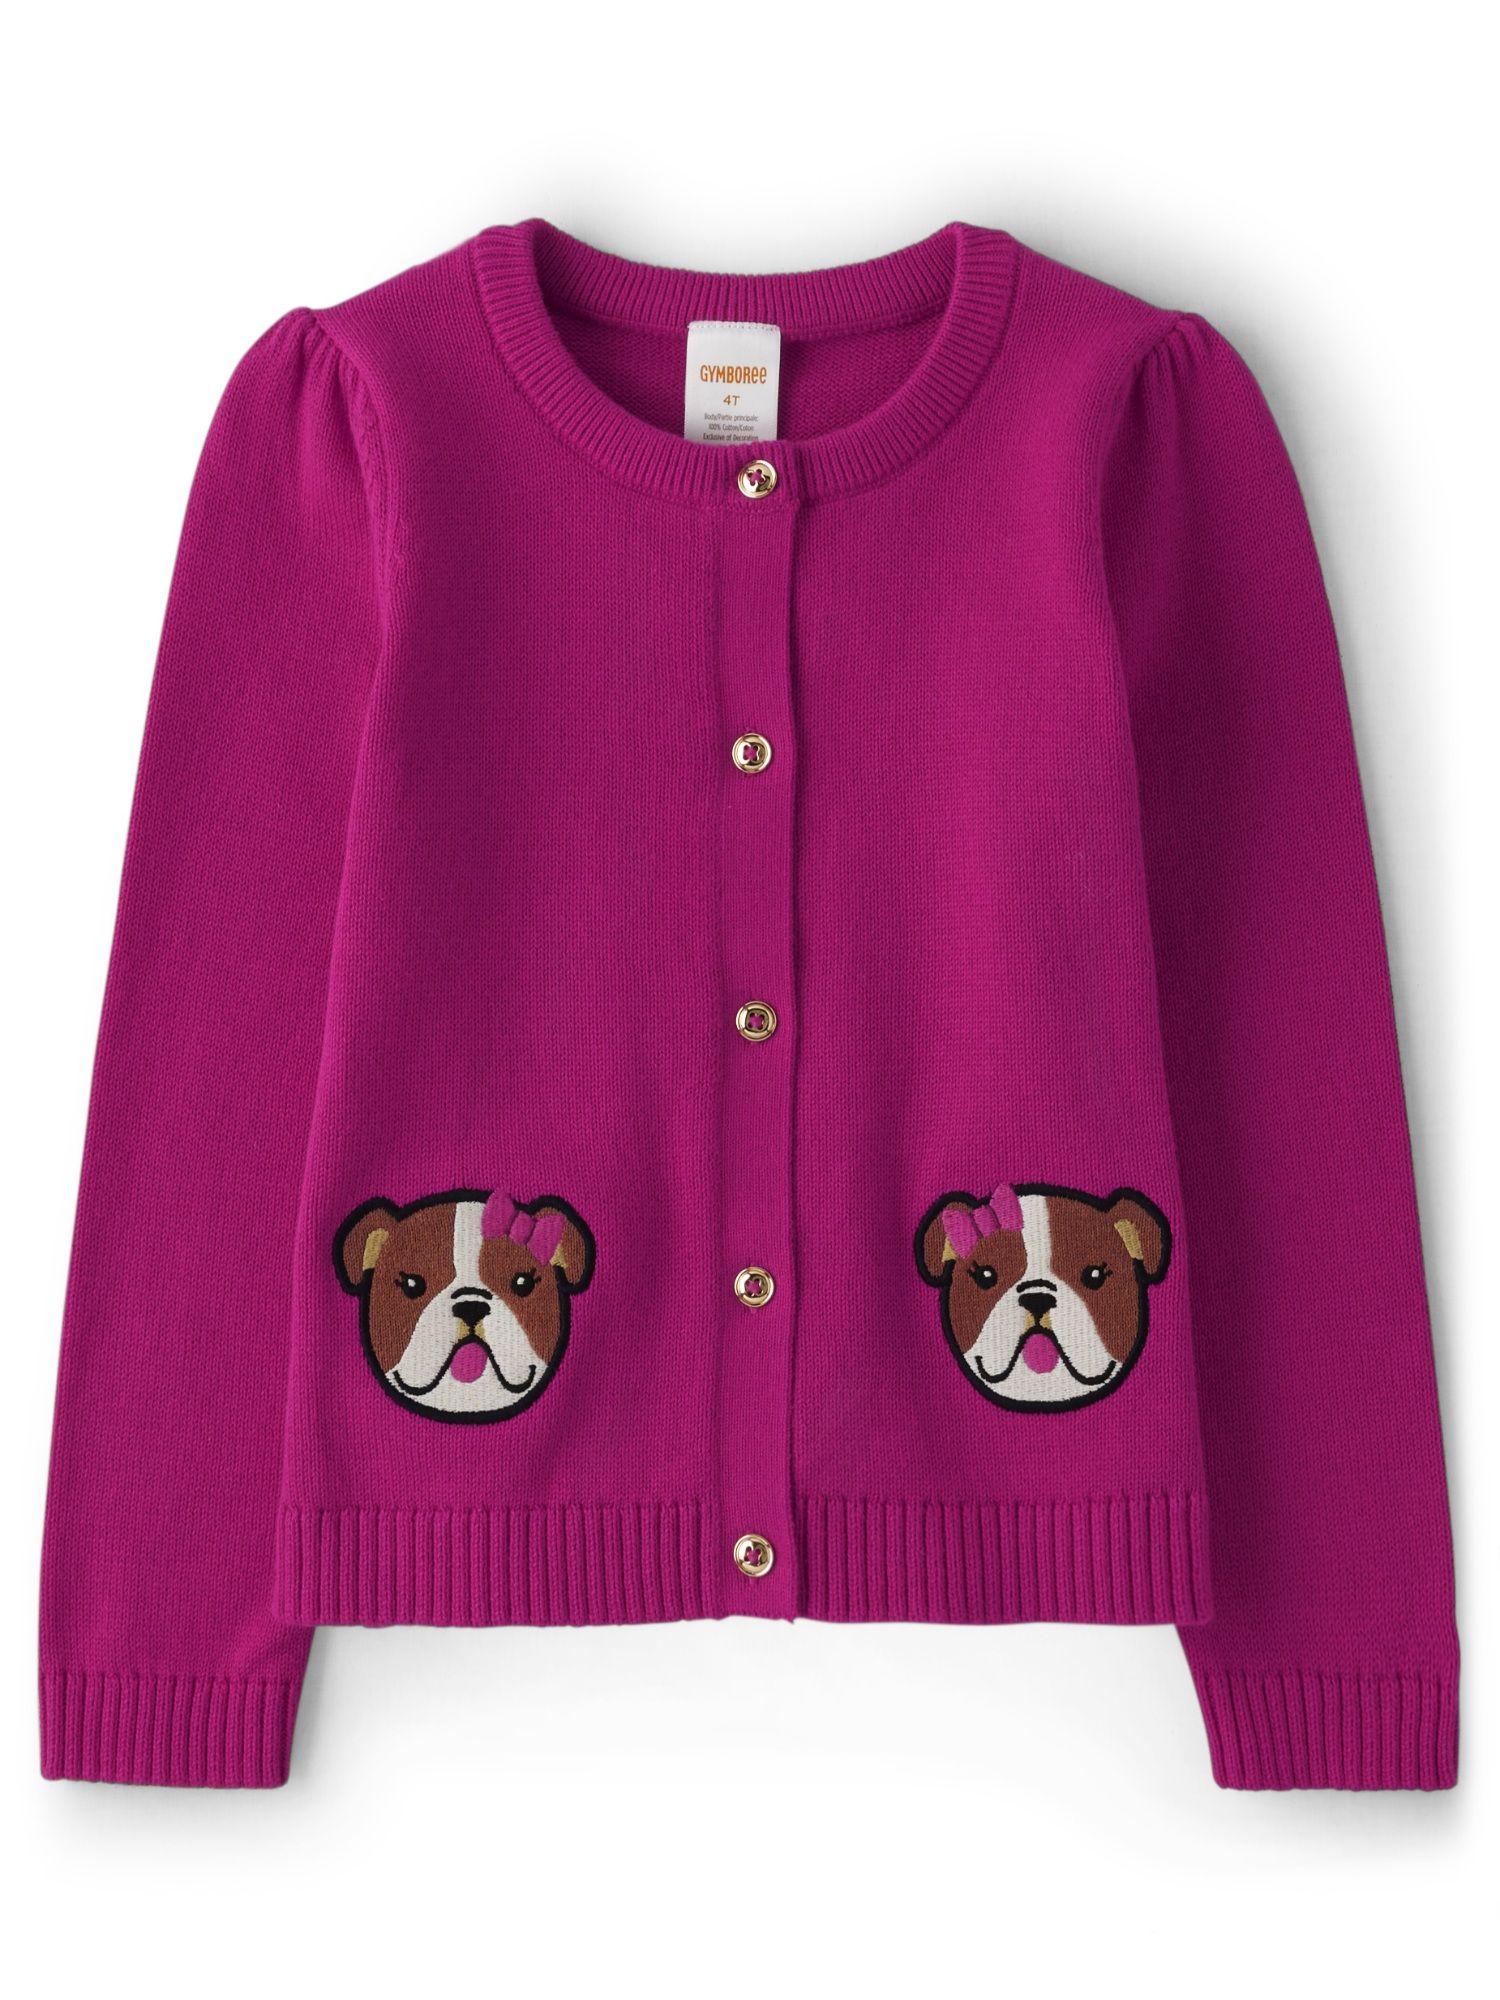 girls graphic print pink sweater (12-18 months)